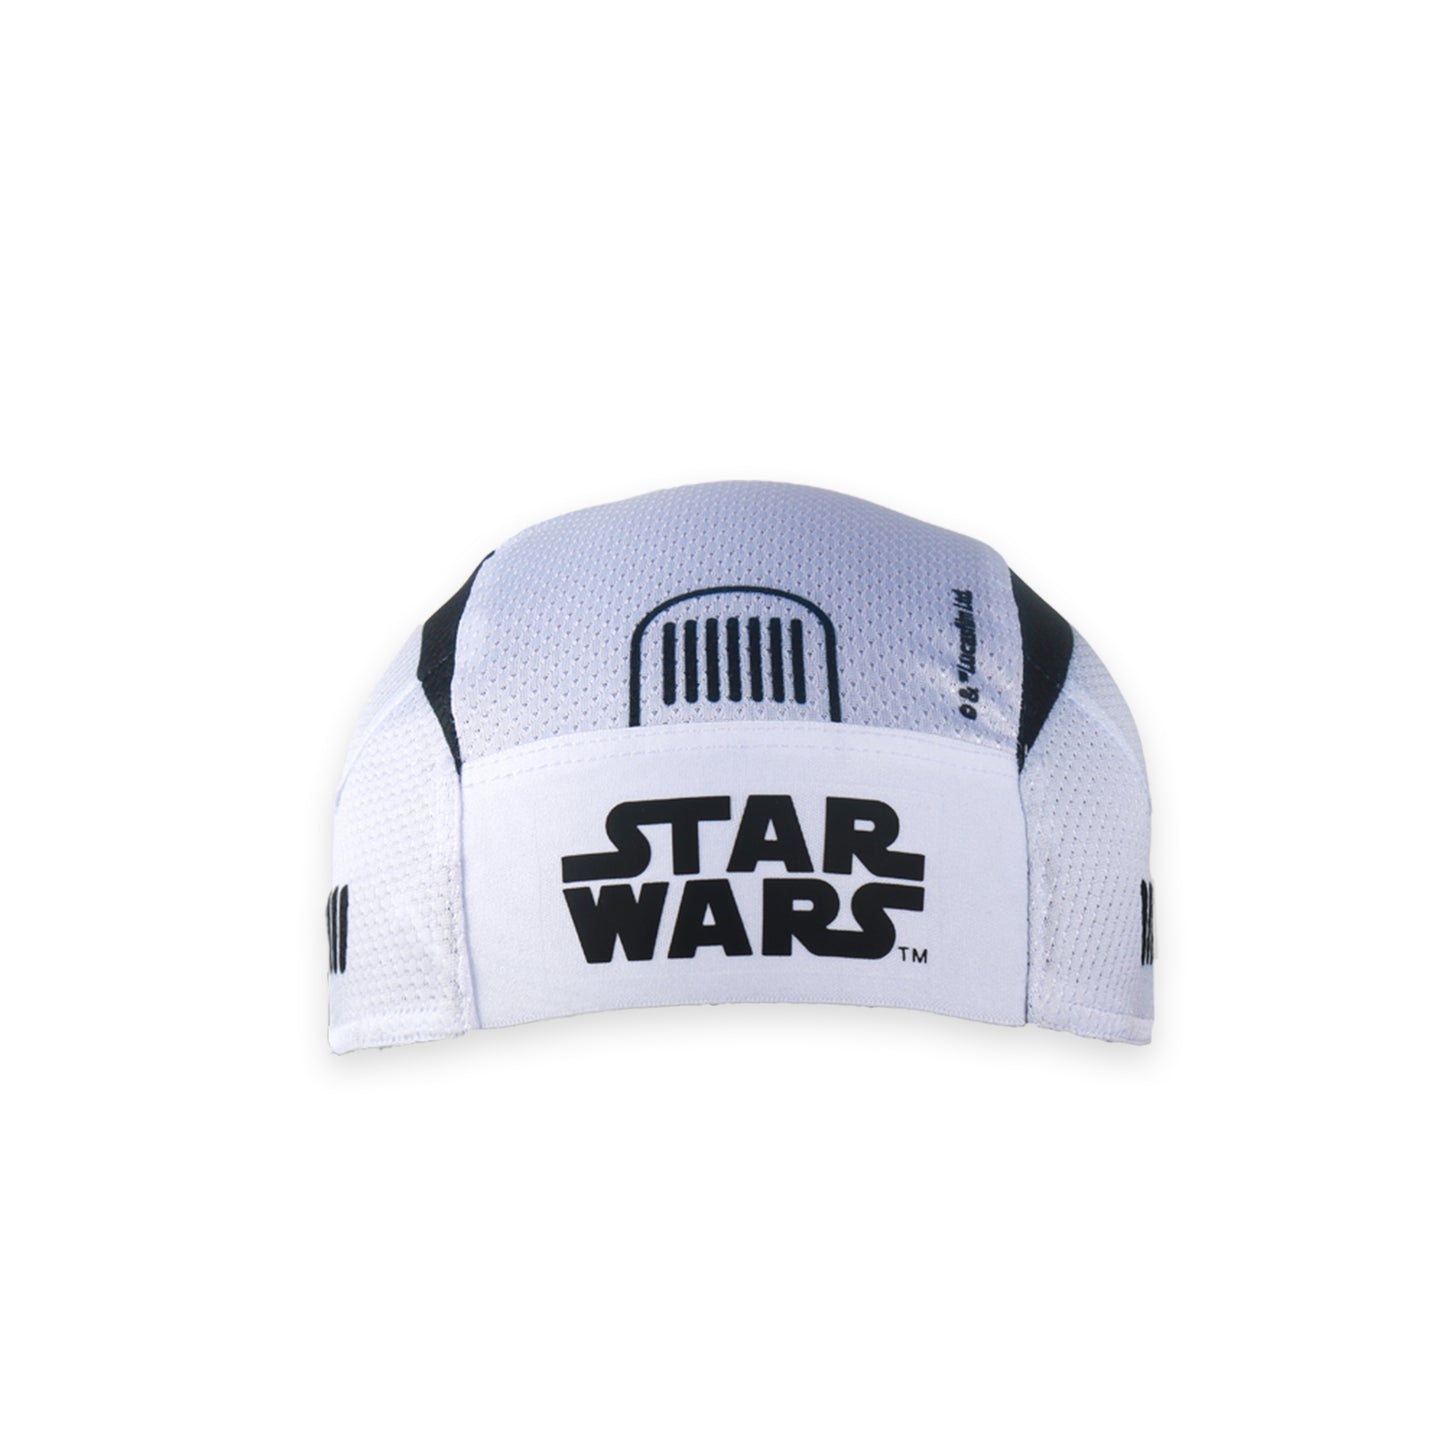 Rudy Project Star Wars Storm Trooper Cycling Cap